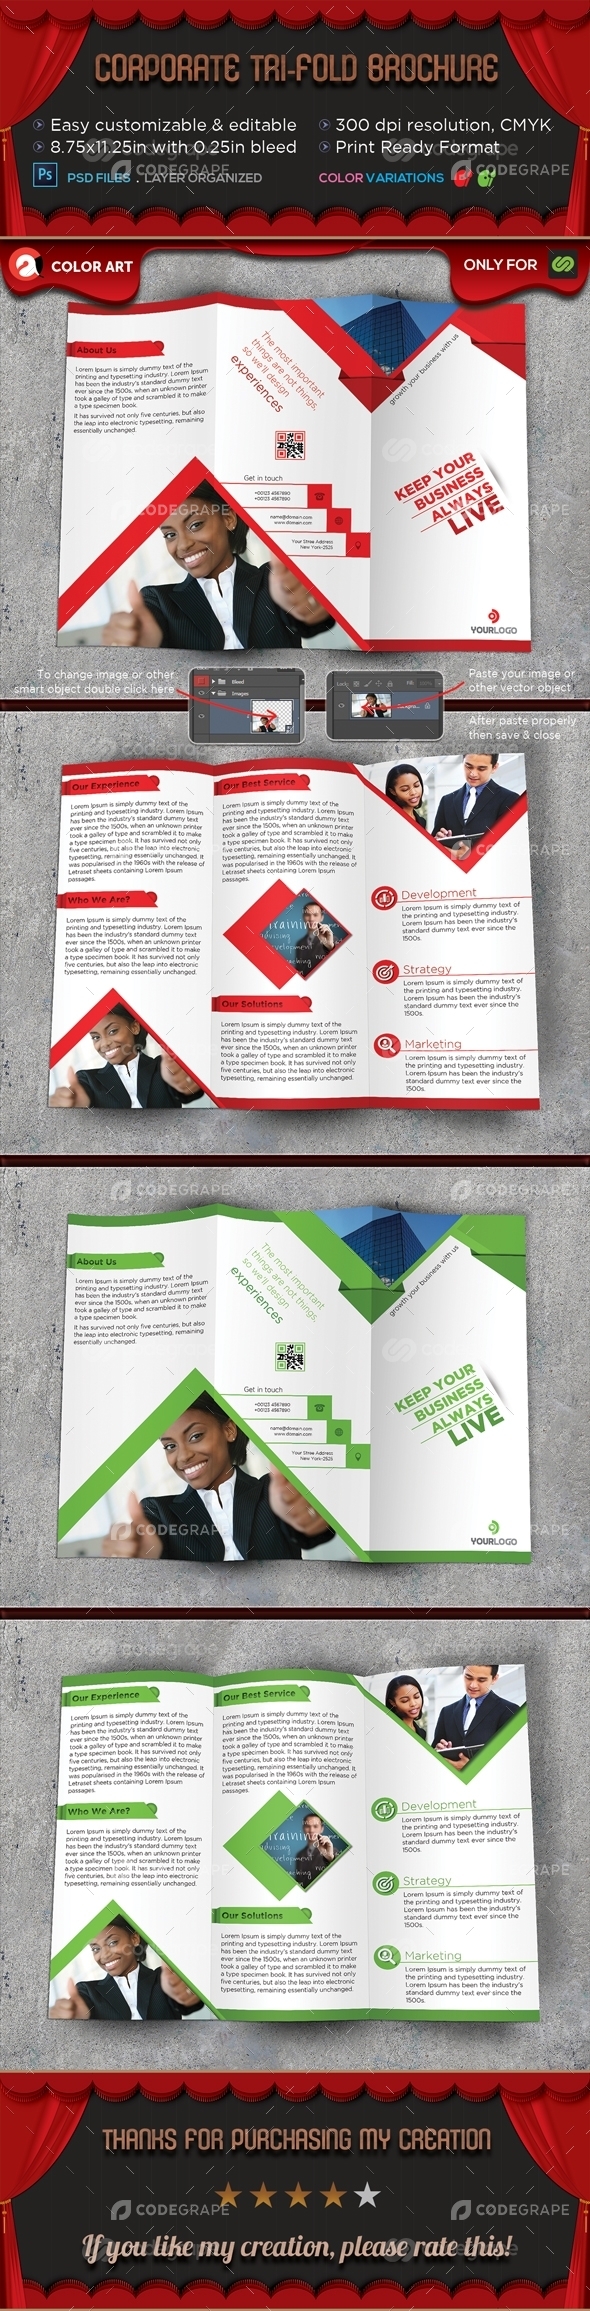 Corporate Tri-fold Brochure V.3